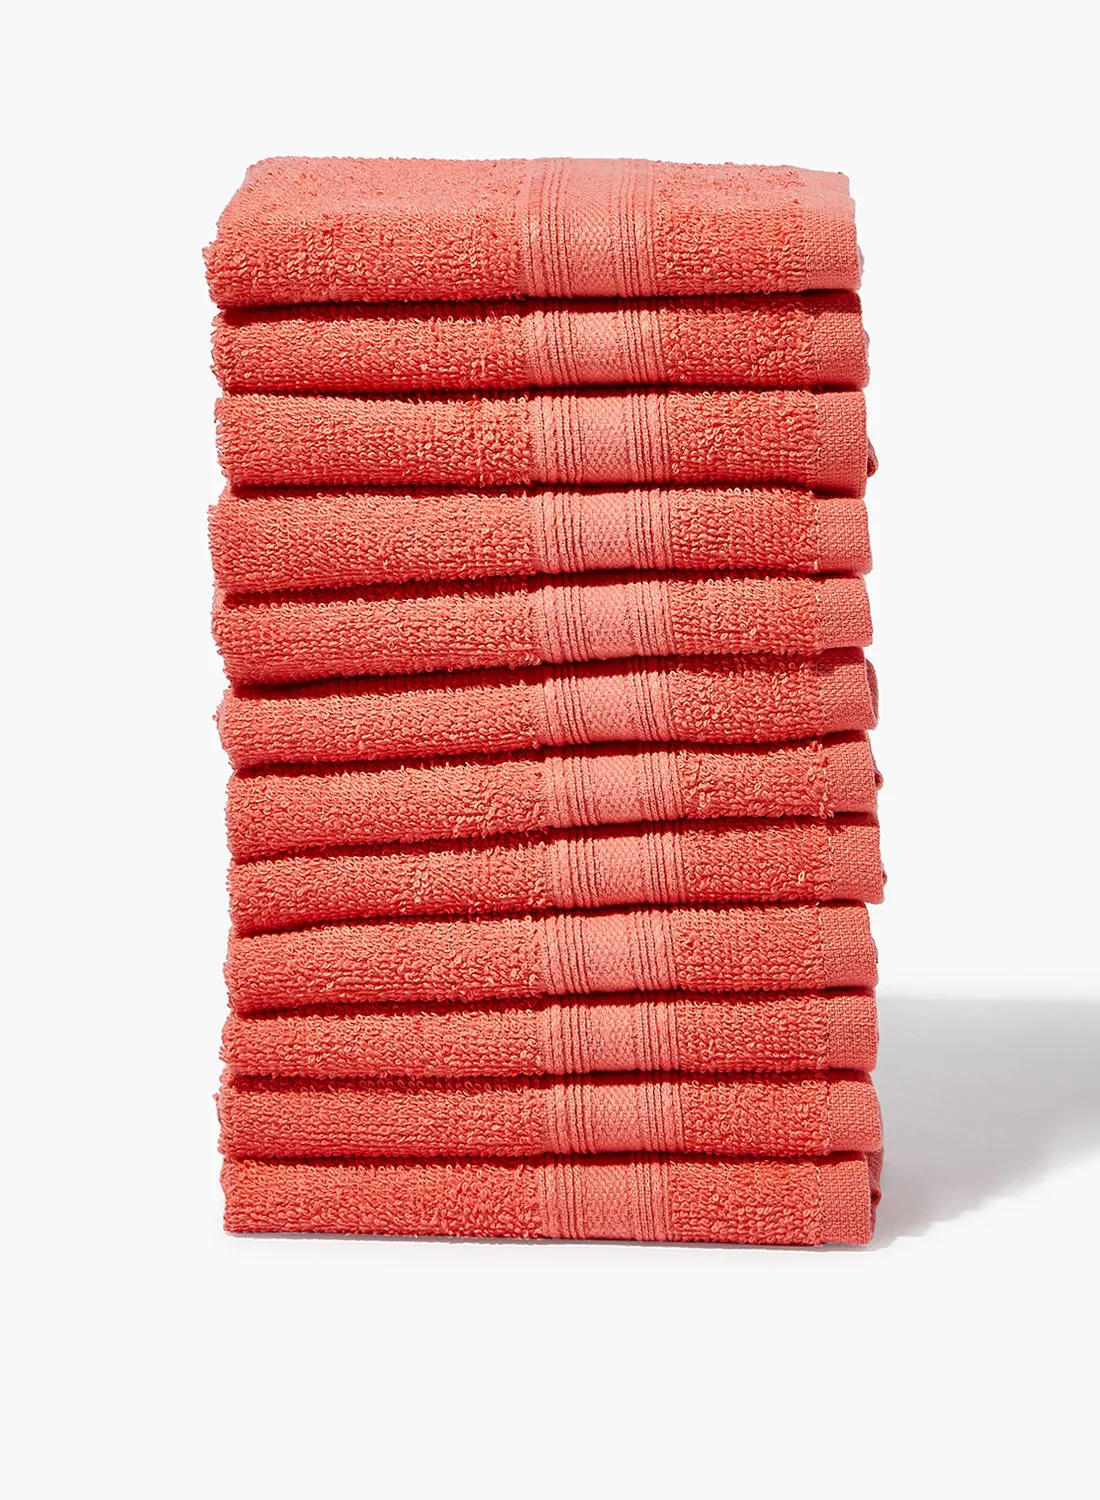 Amal 12 Piece Bathroom Towel Set - 400 GSM 100% Cotton Terry - 12 Face Towel - Melon Color -Quick Dry - Super Absorbent